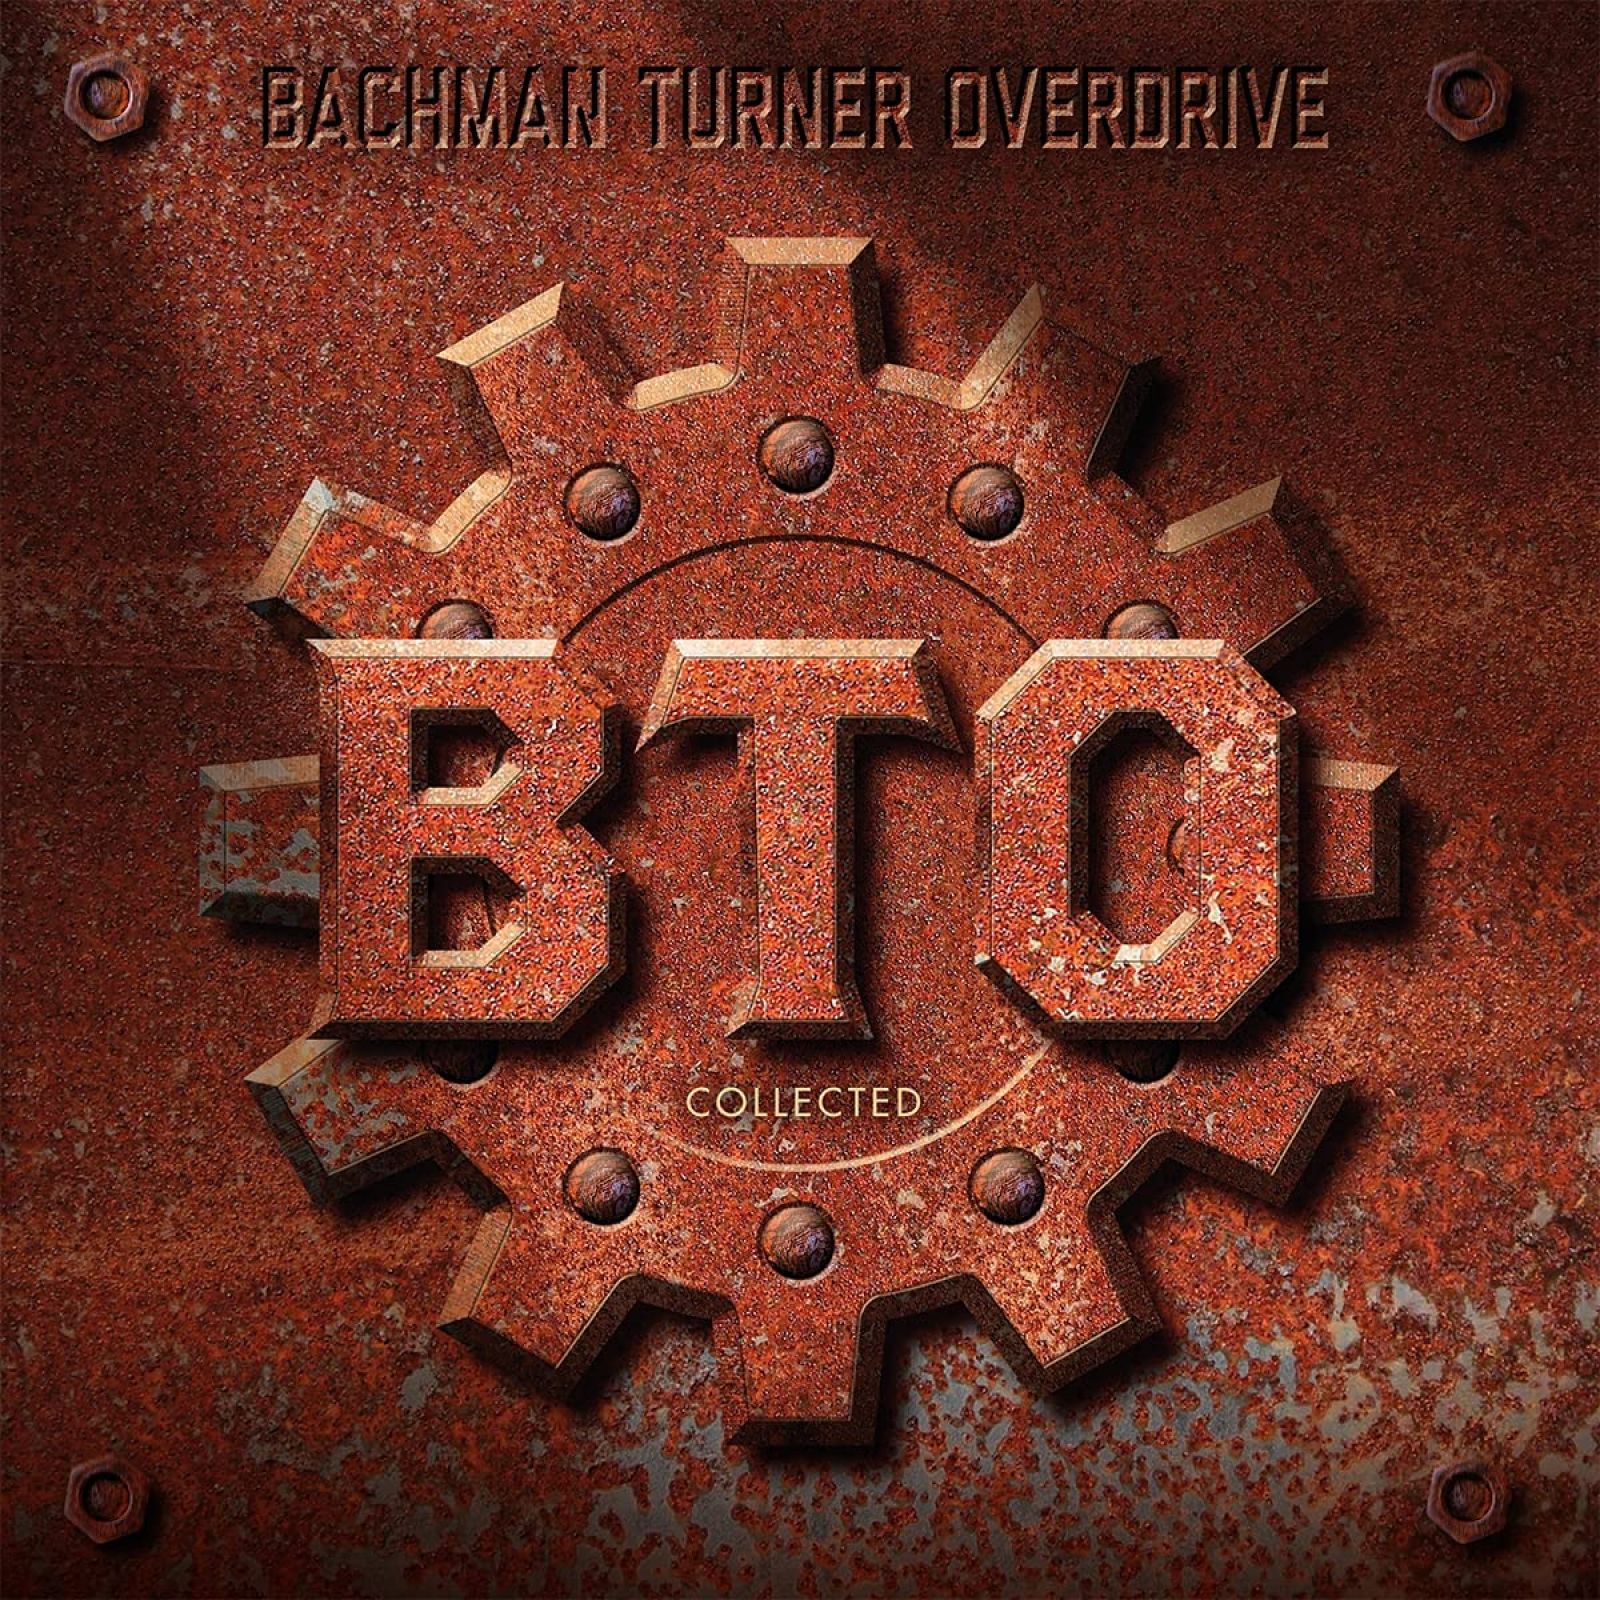 Виниловая пластинка Bachman Turner Overdrive, Collected: Greatest Songs (0600753911327) виниловая пластинка bachman turner overdrive collected 2 lp